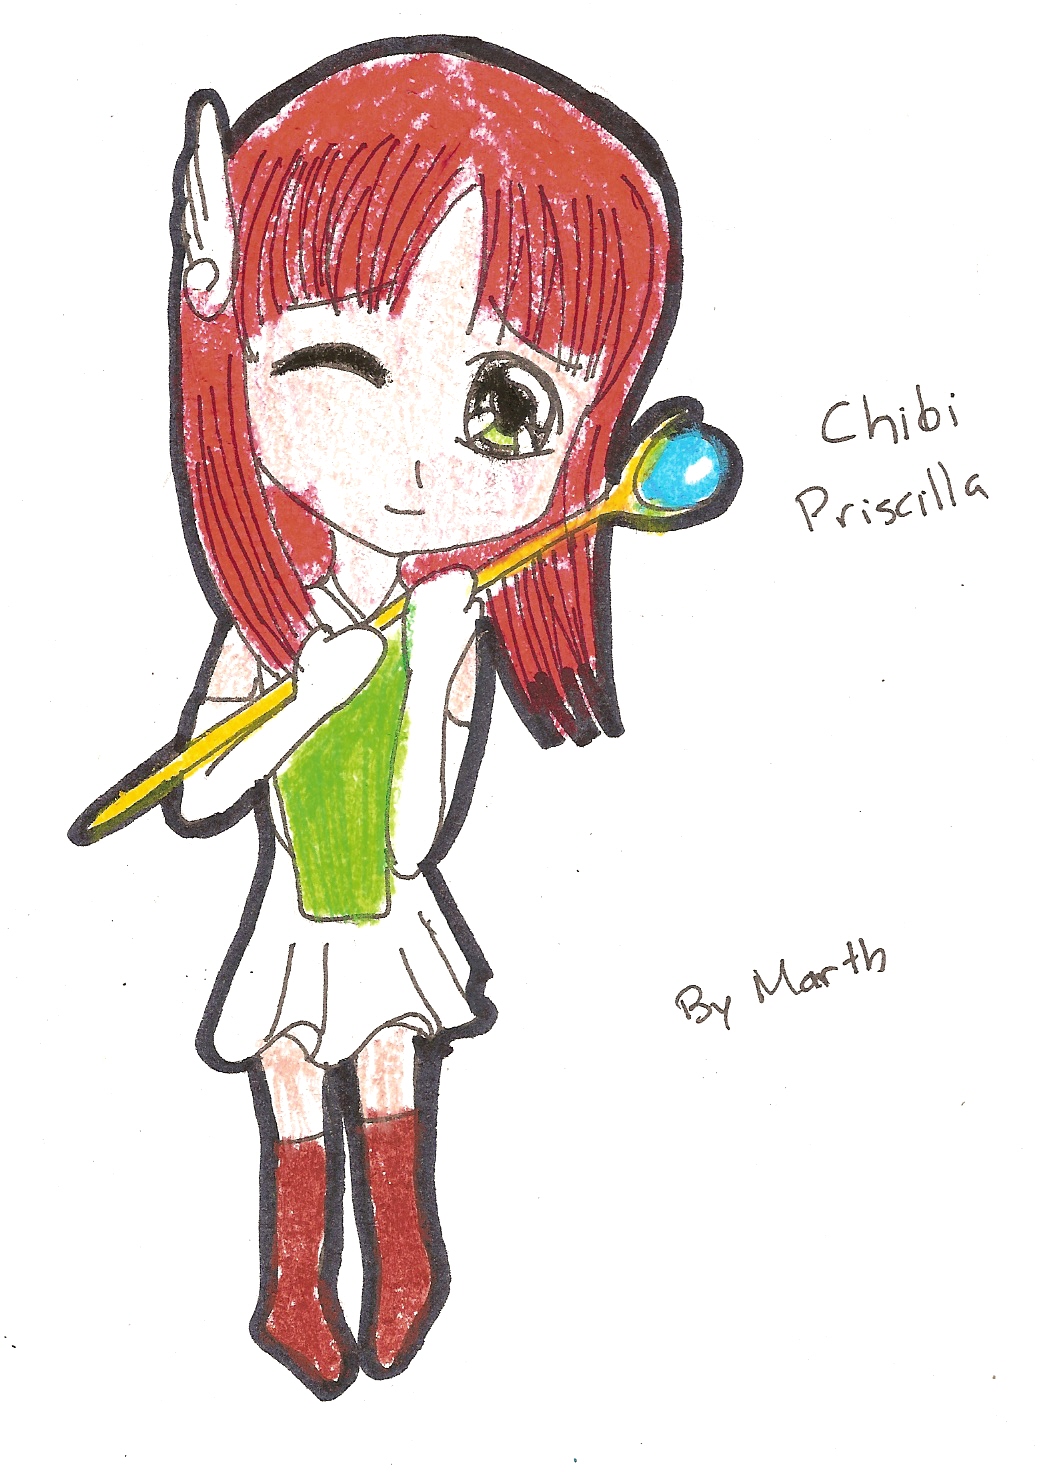 Chibi priscilla by lordmaresuke